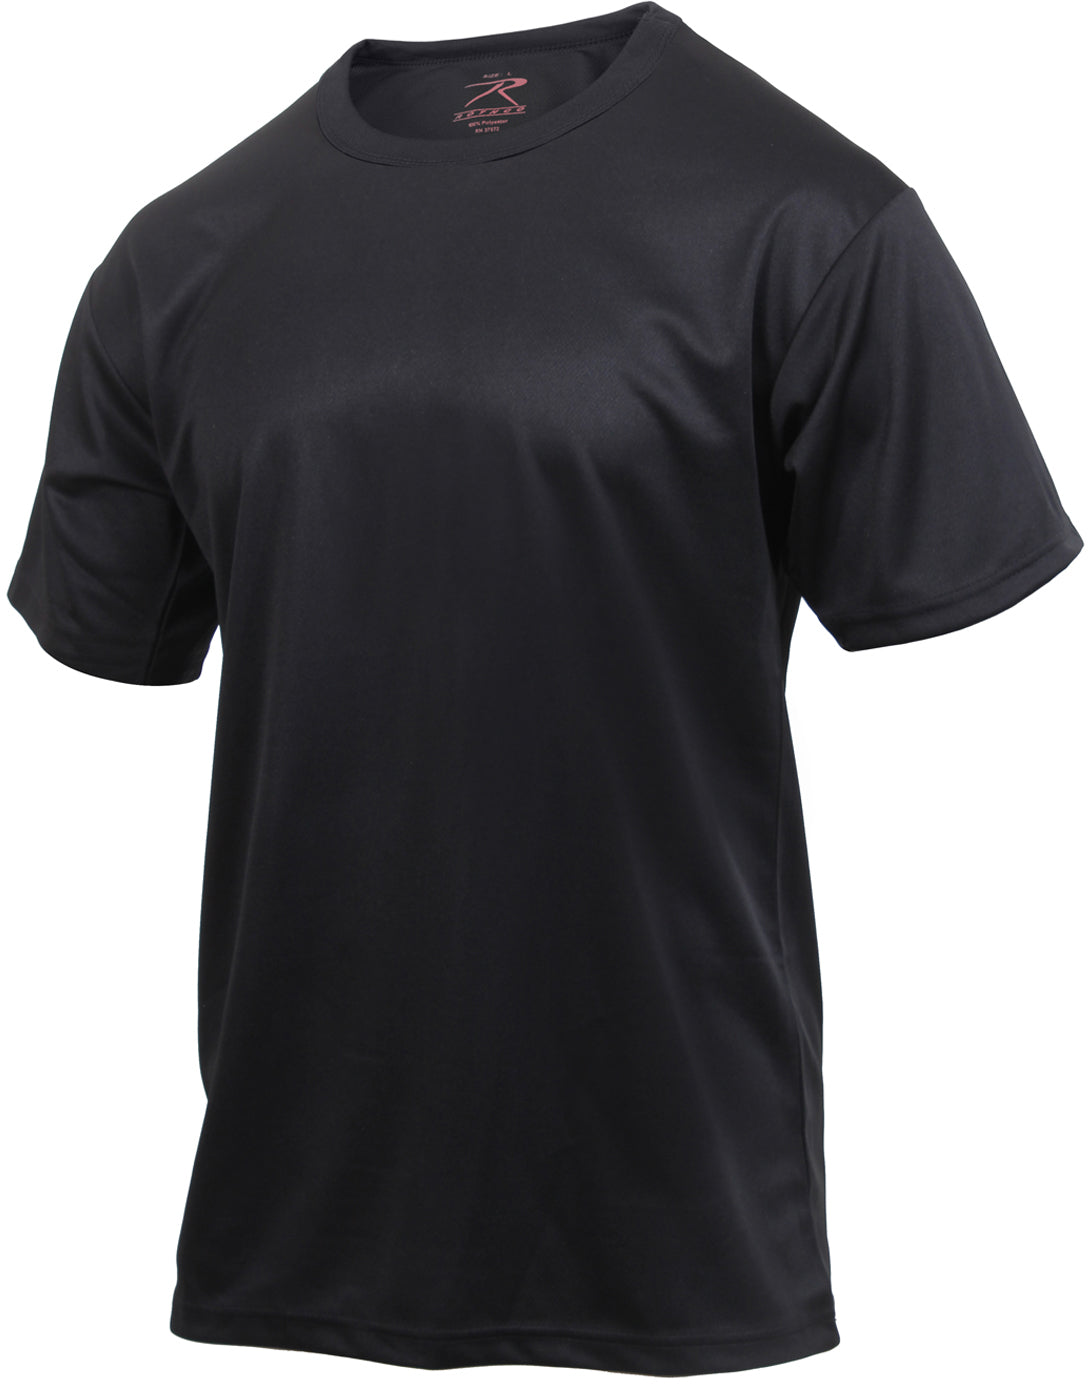 Black - Quick Dry Moisture Wicking T-Shirt